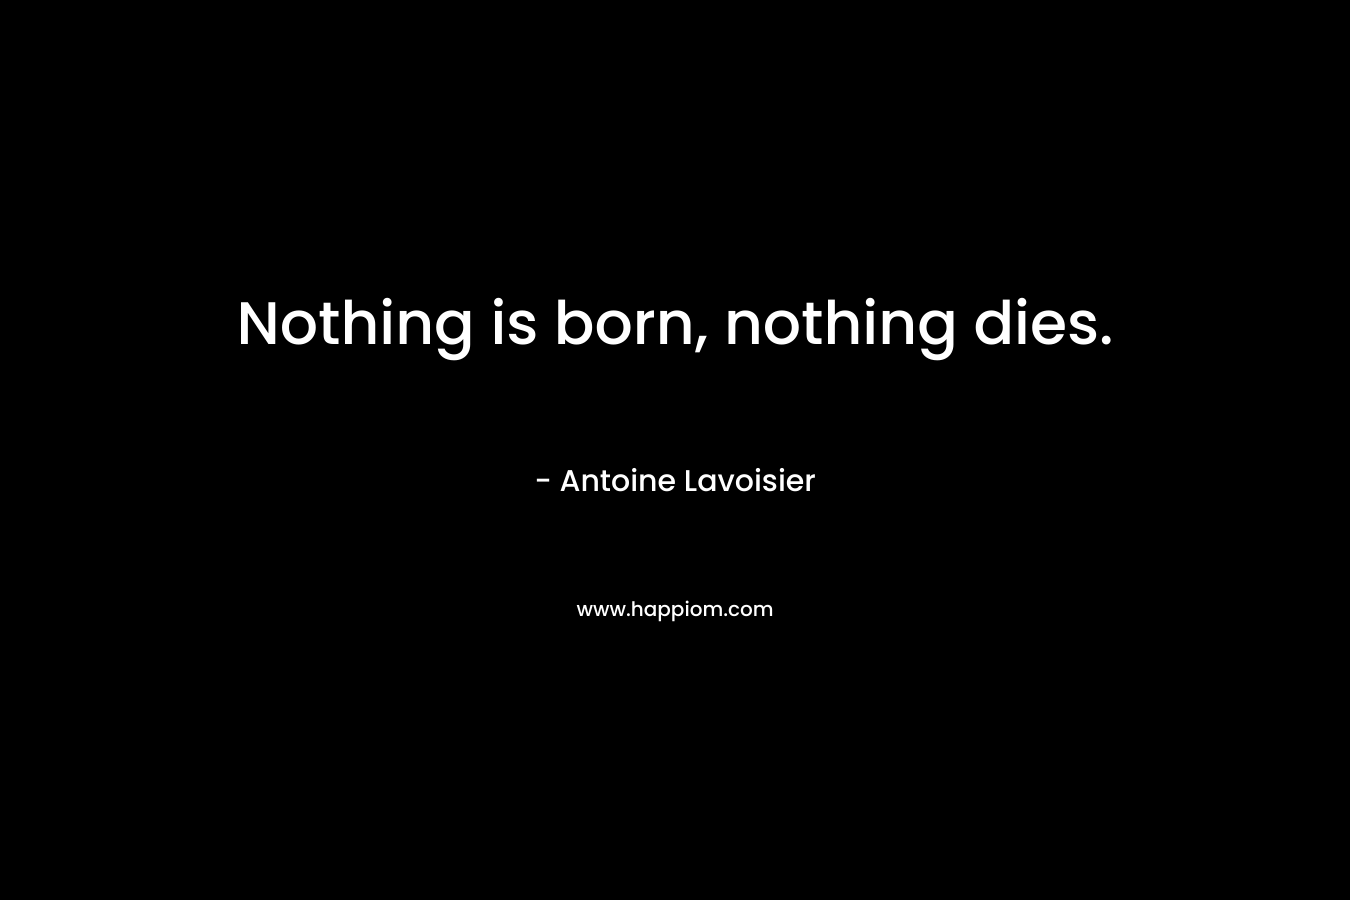 Nothing is born, nothing dies.